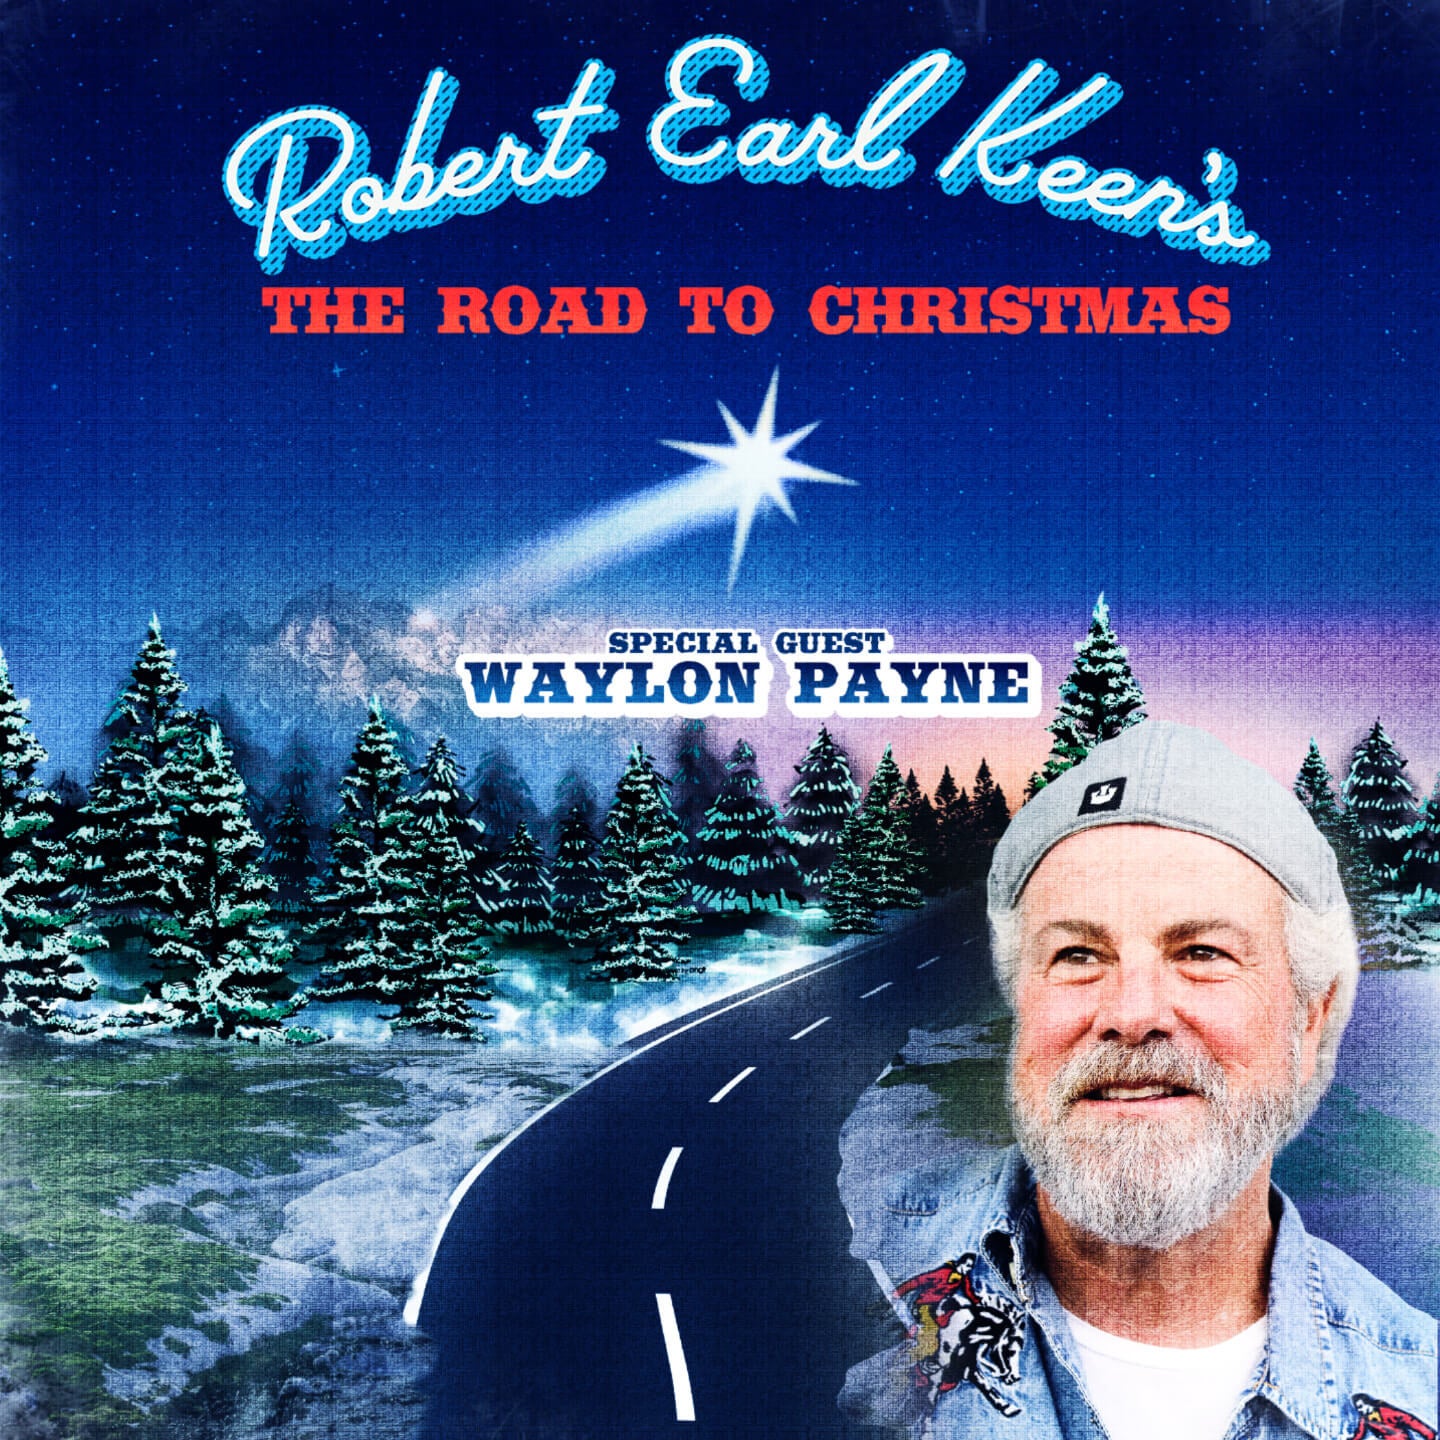 Robert Earl Keen's The Road to Christmas